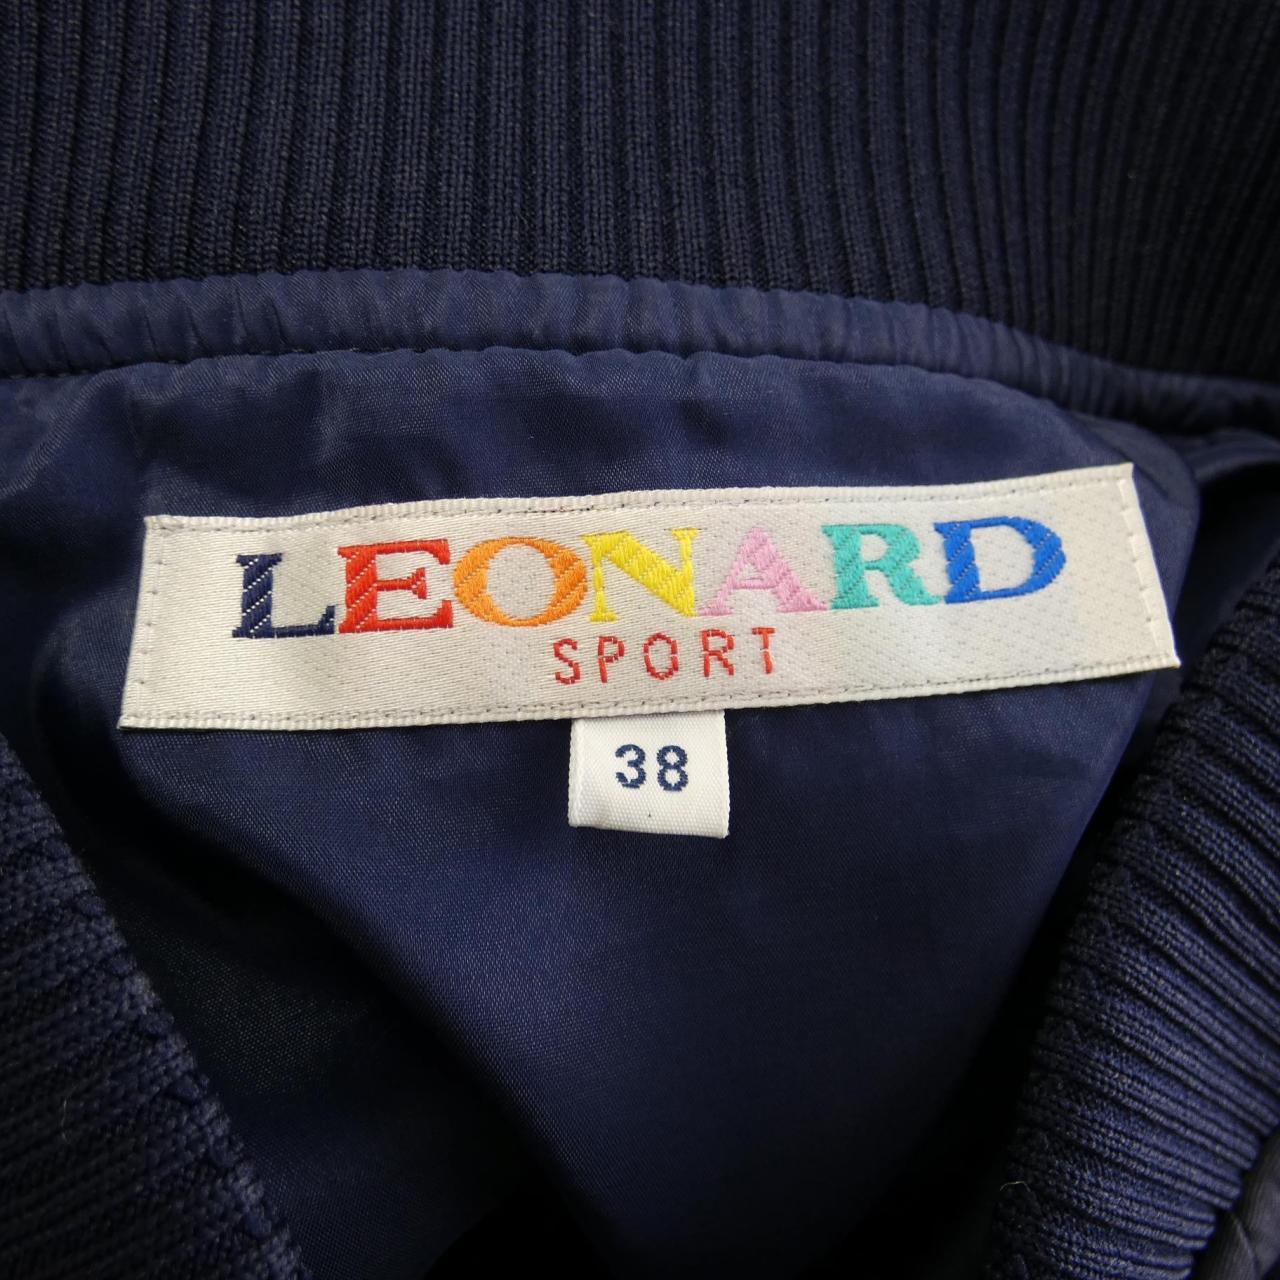 LEONARD SPORT LEONARD SPORT jacket